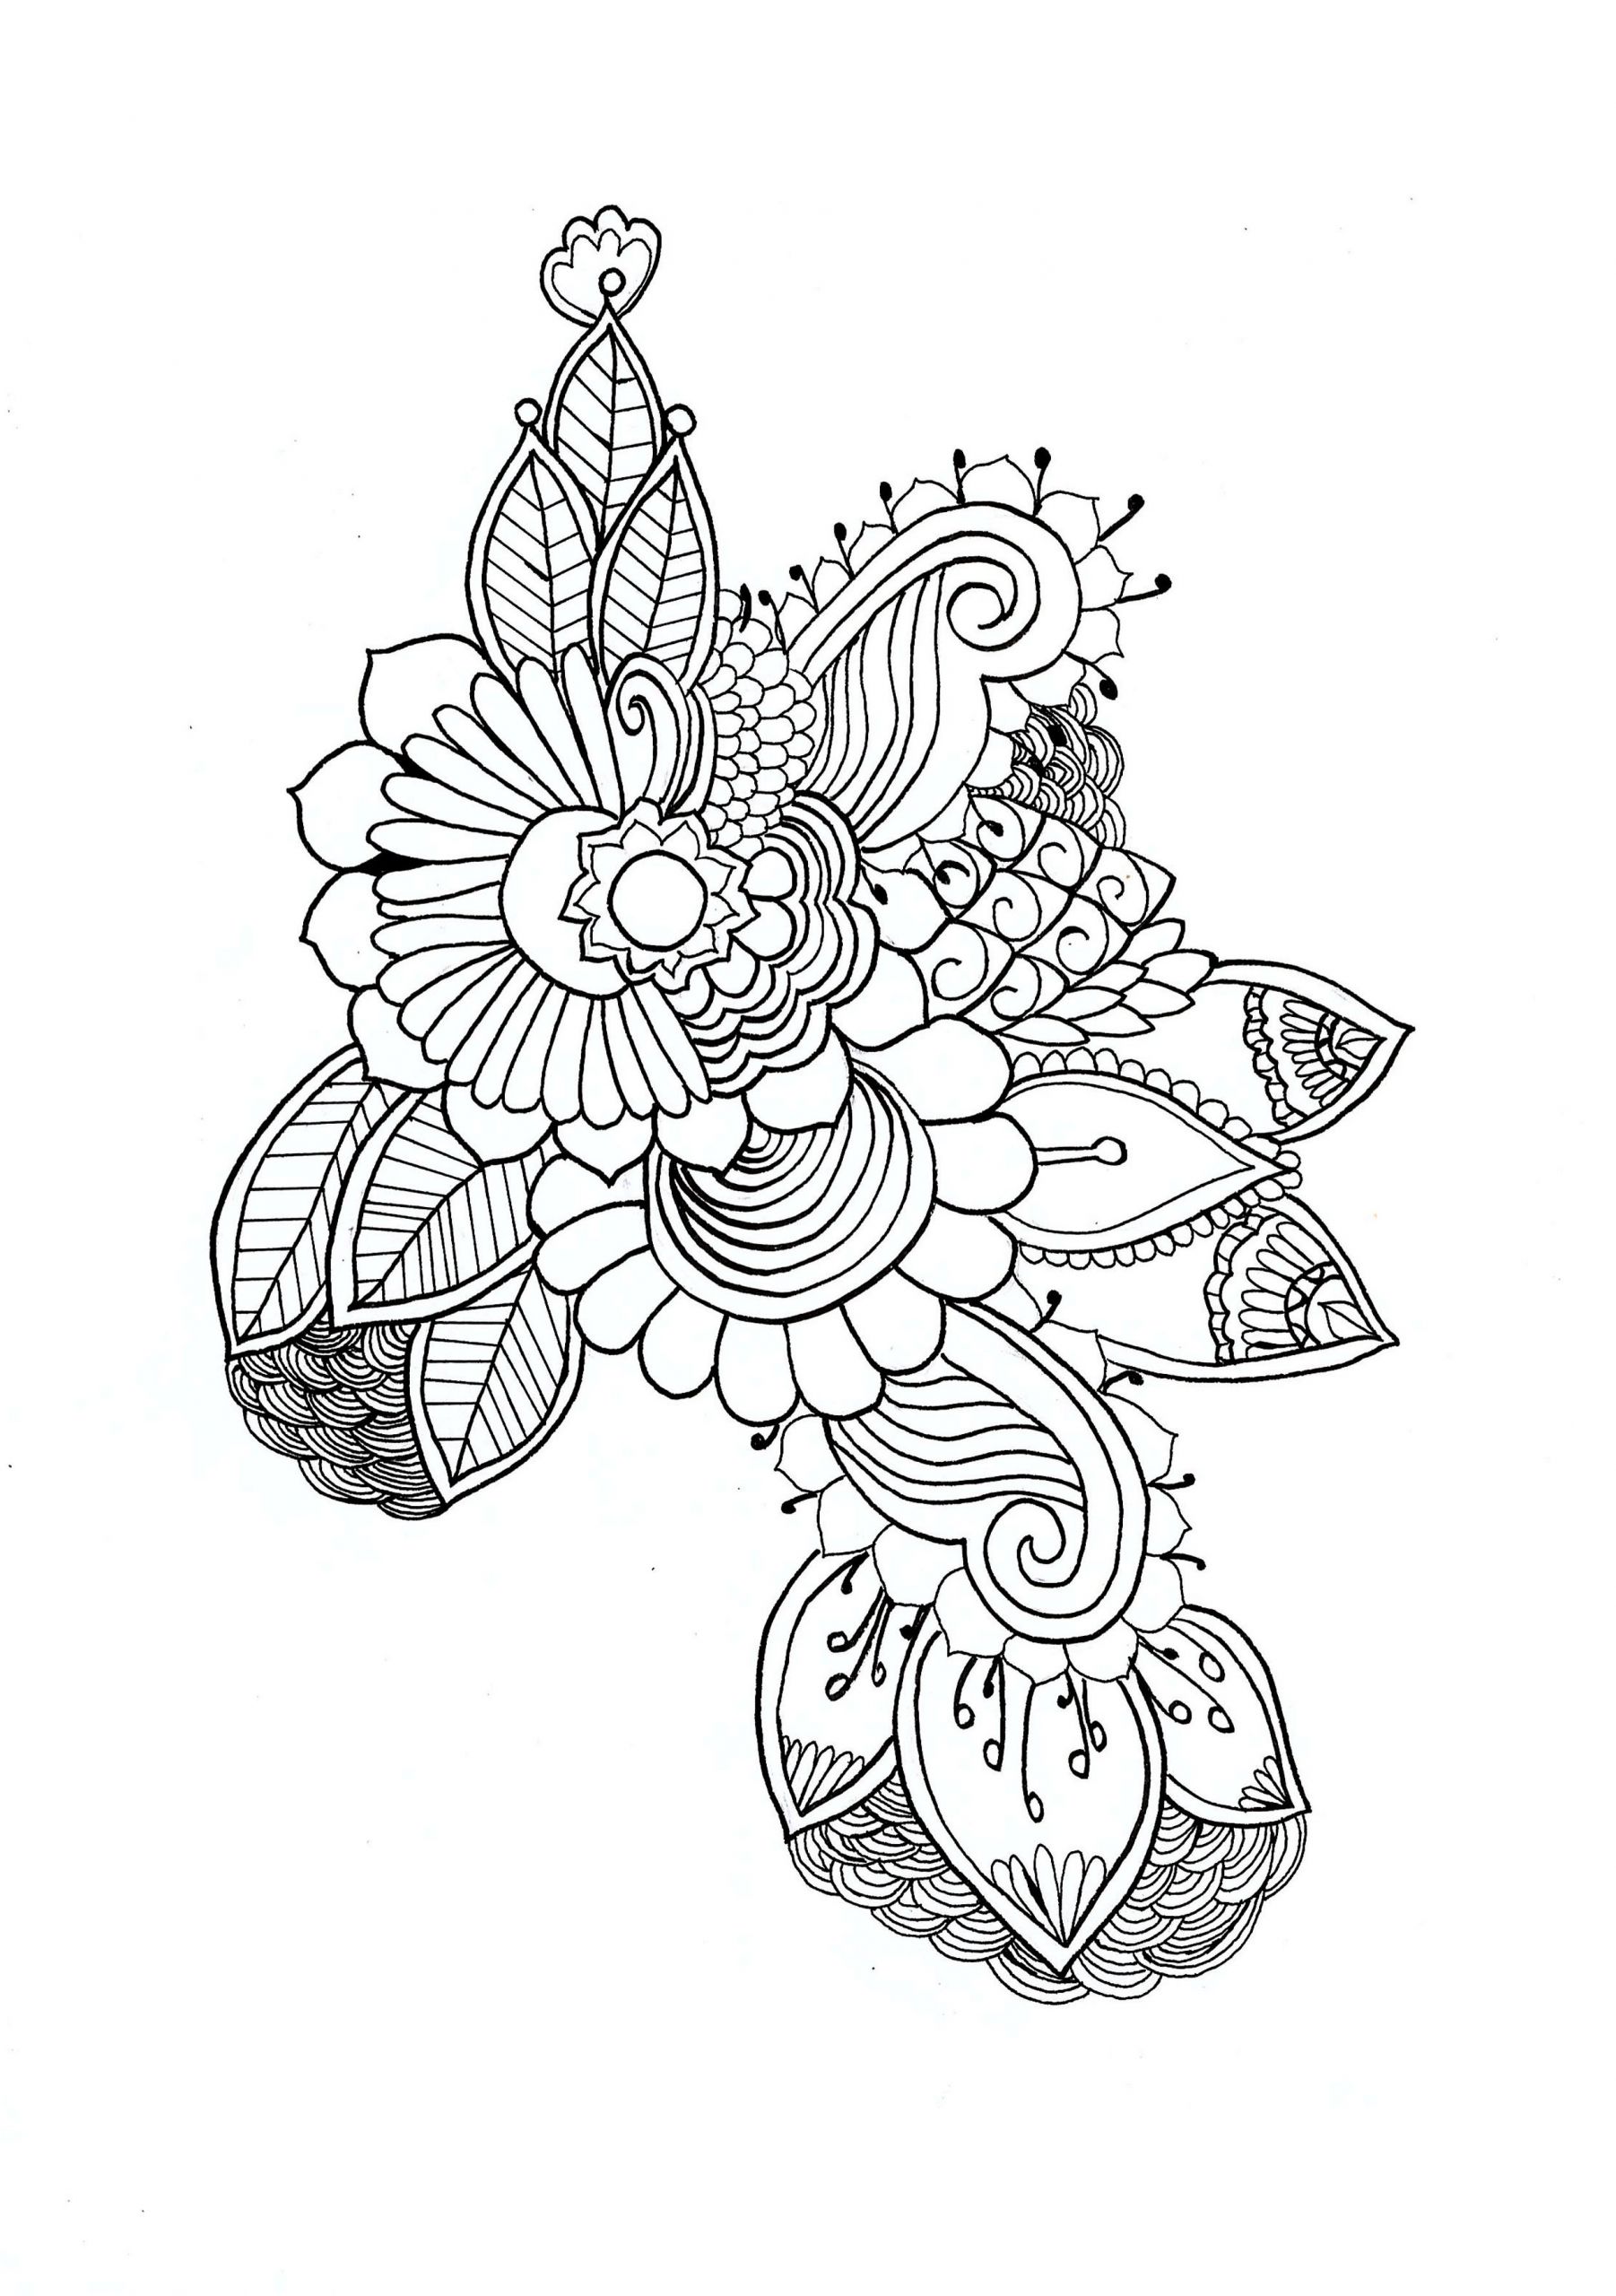 image=mandalas coloring mandala for chloe 1